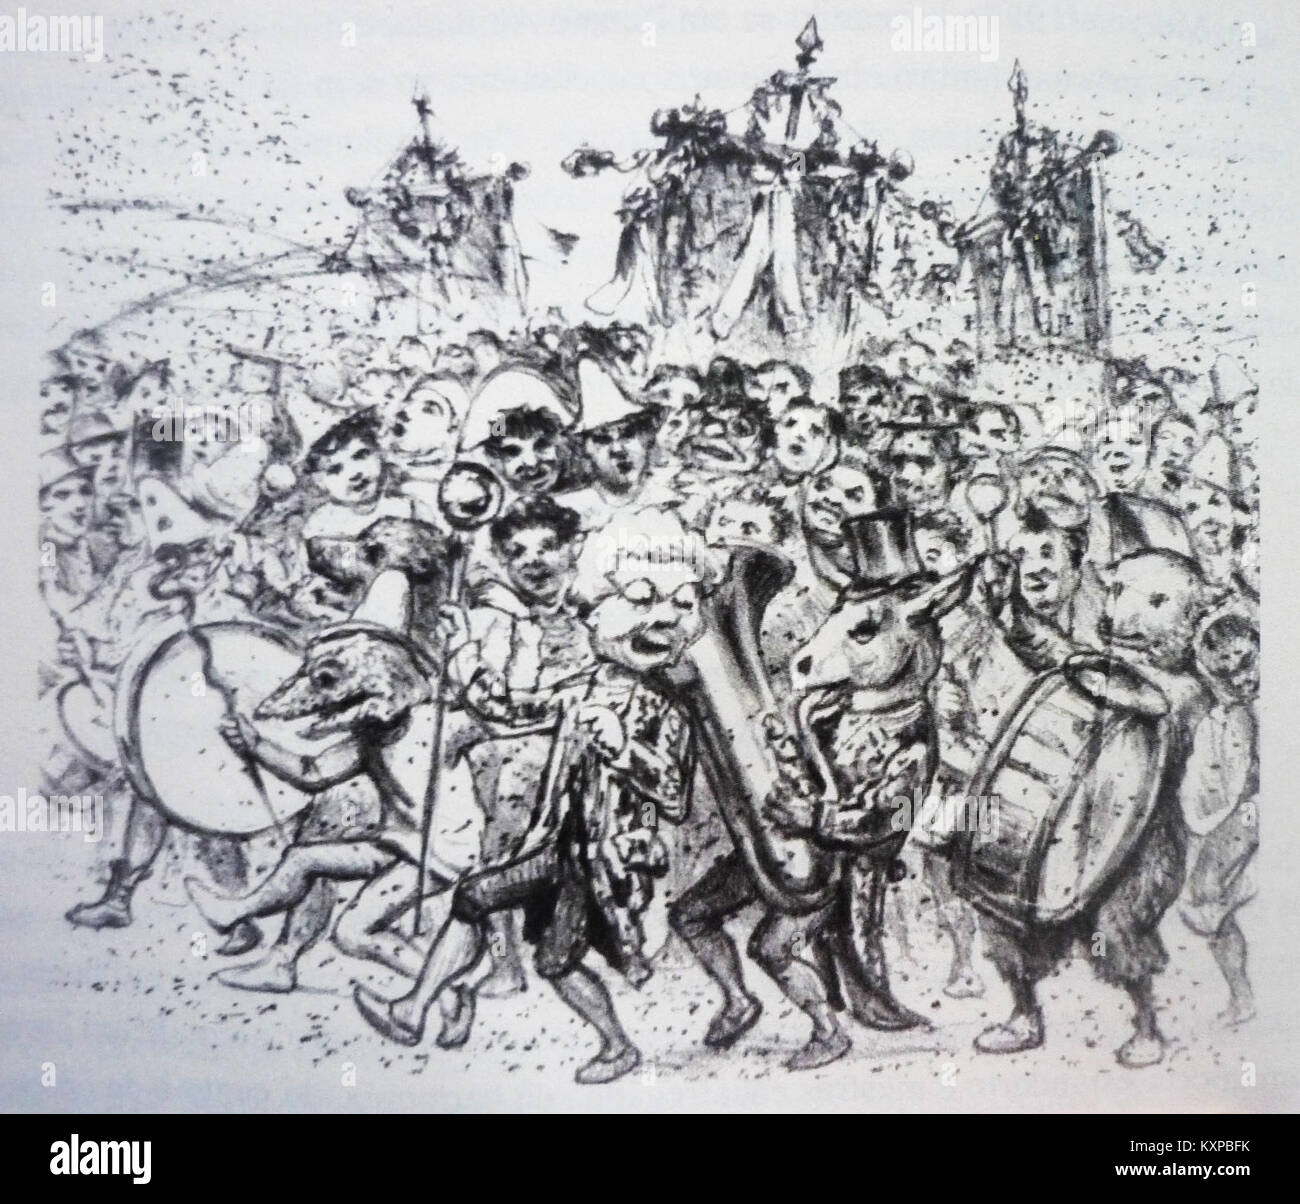 Carnaval de Rio - Don Quixote - ano 8, n°146, p. 8, 31 janvier 1907 Stock Photo